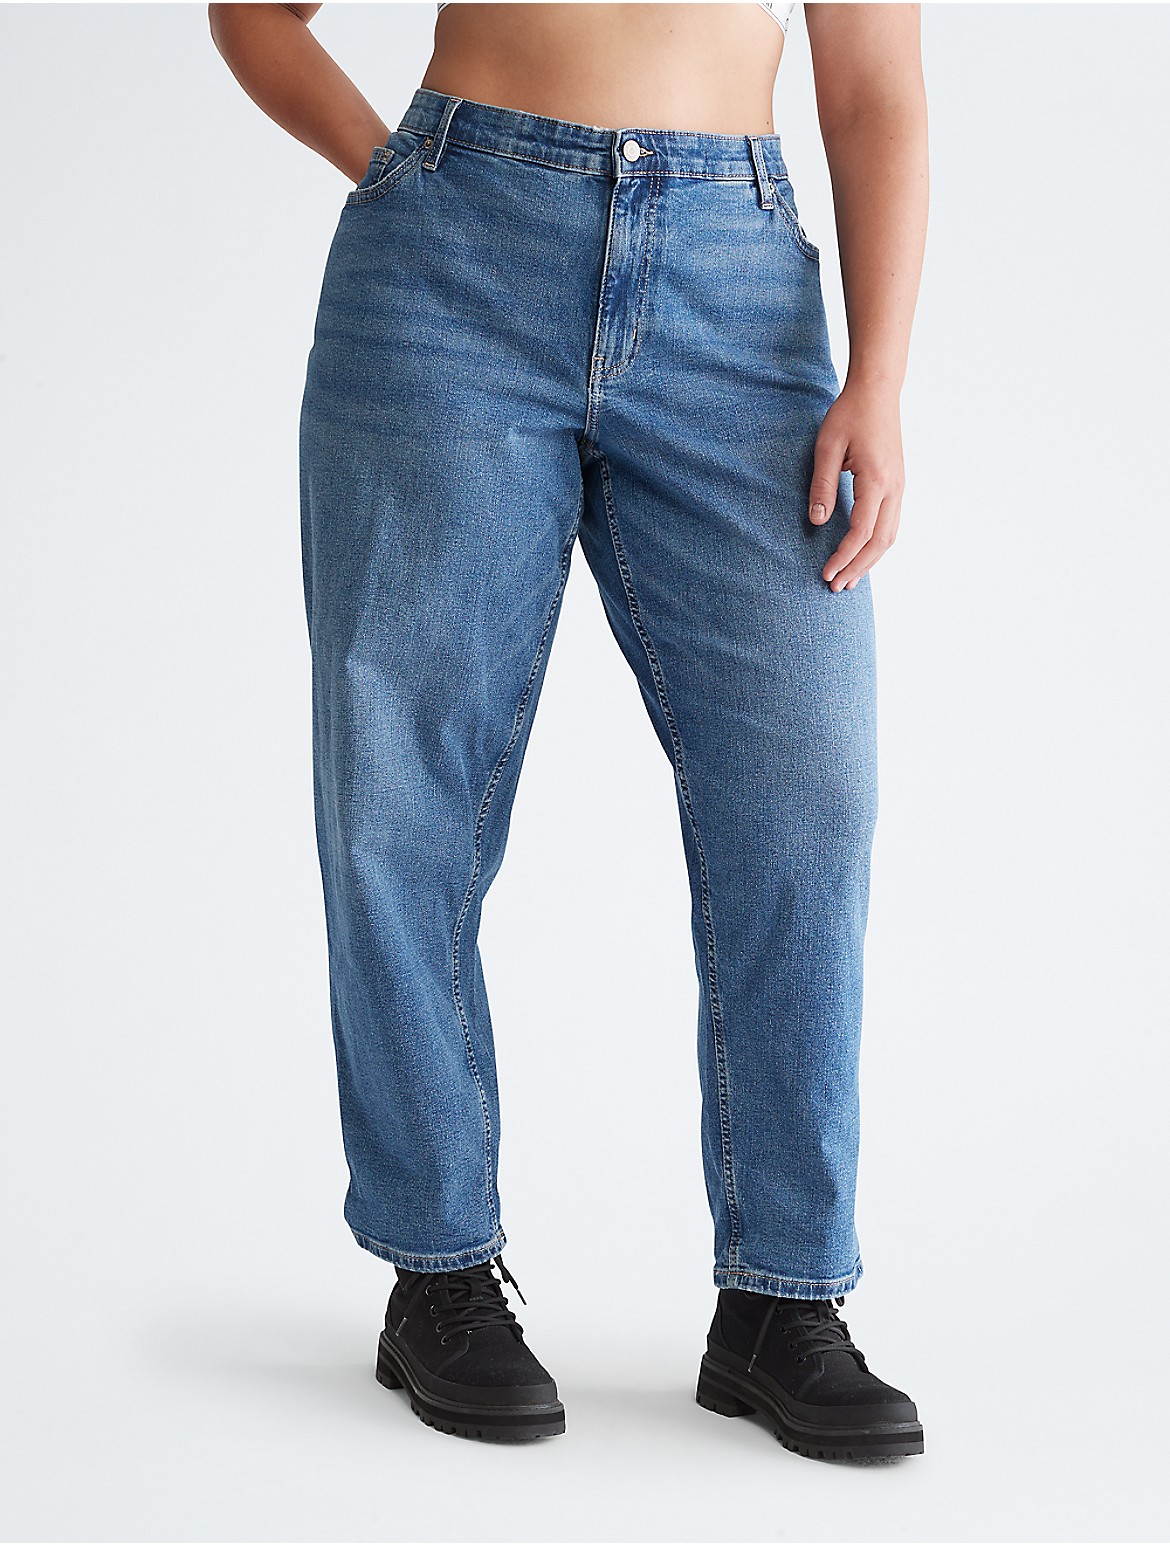 Calvin Klein Women's Plus Size Boyfriend Slim Fit Mid Rise Light Blue Jeans - Blue - 24W